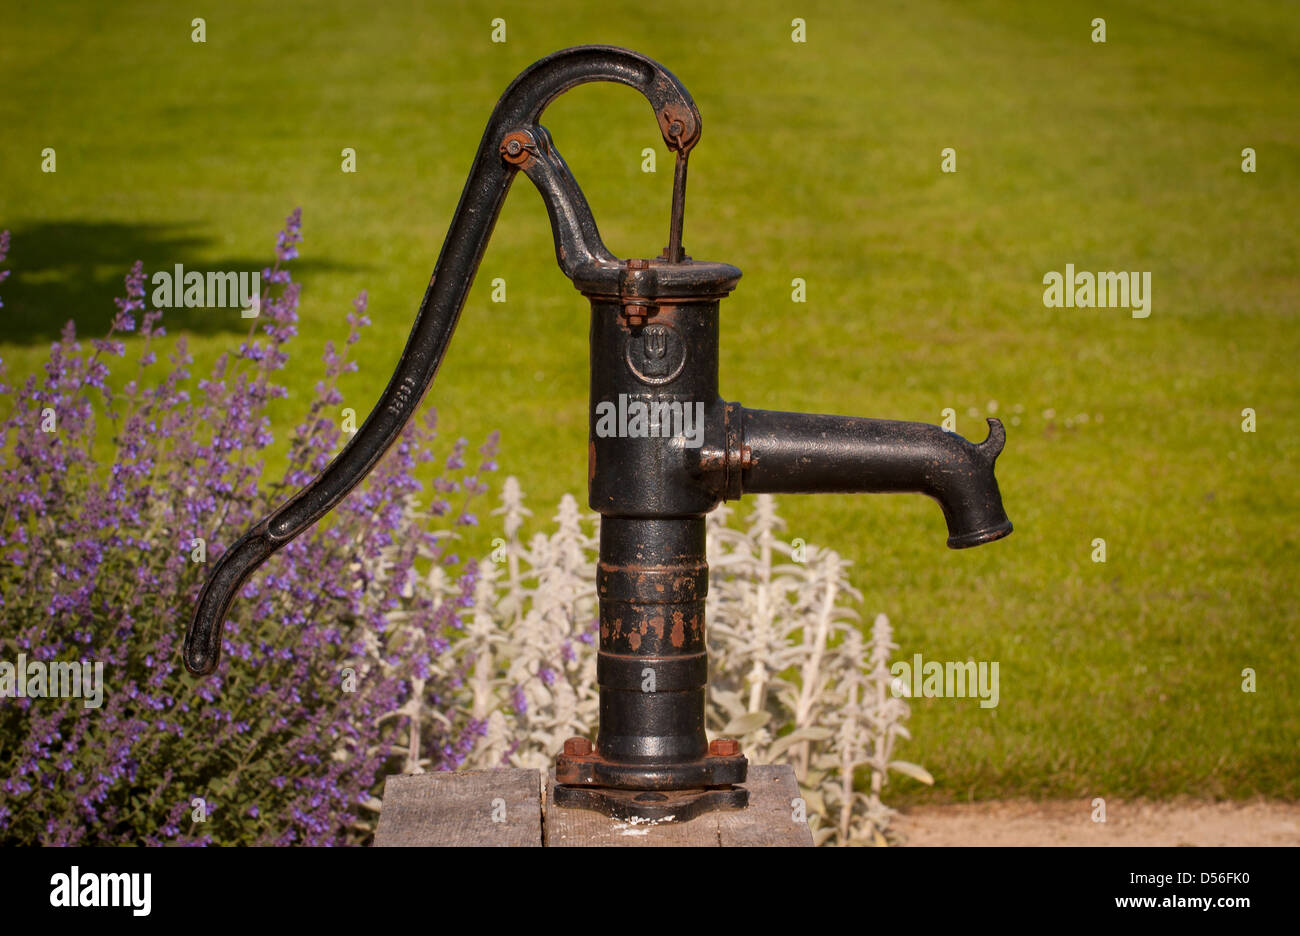 Old Fashioned Hand Water Pump In Garden Stock Photo Royalty Free inside Old Fashioned Hand Water Pump